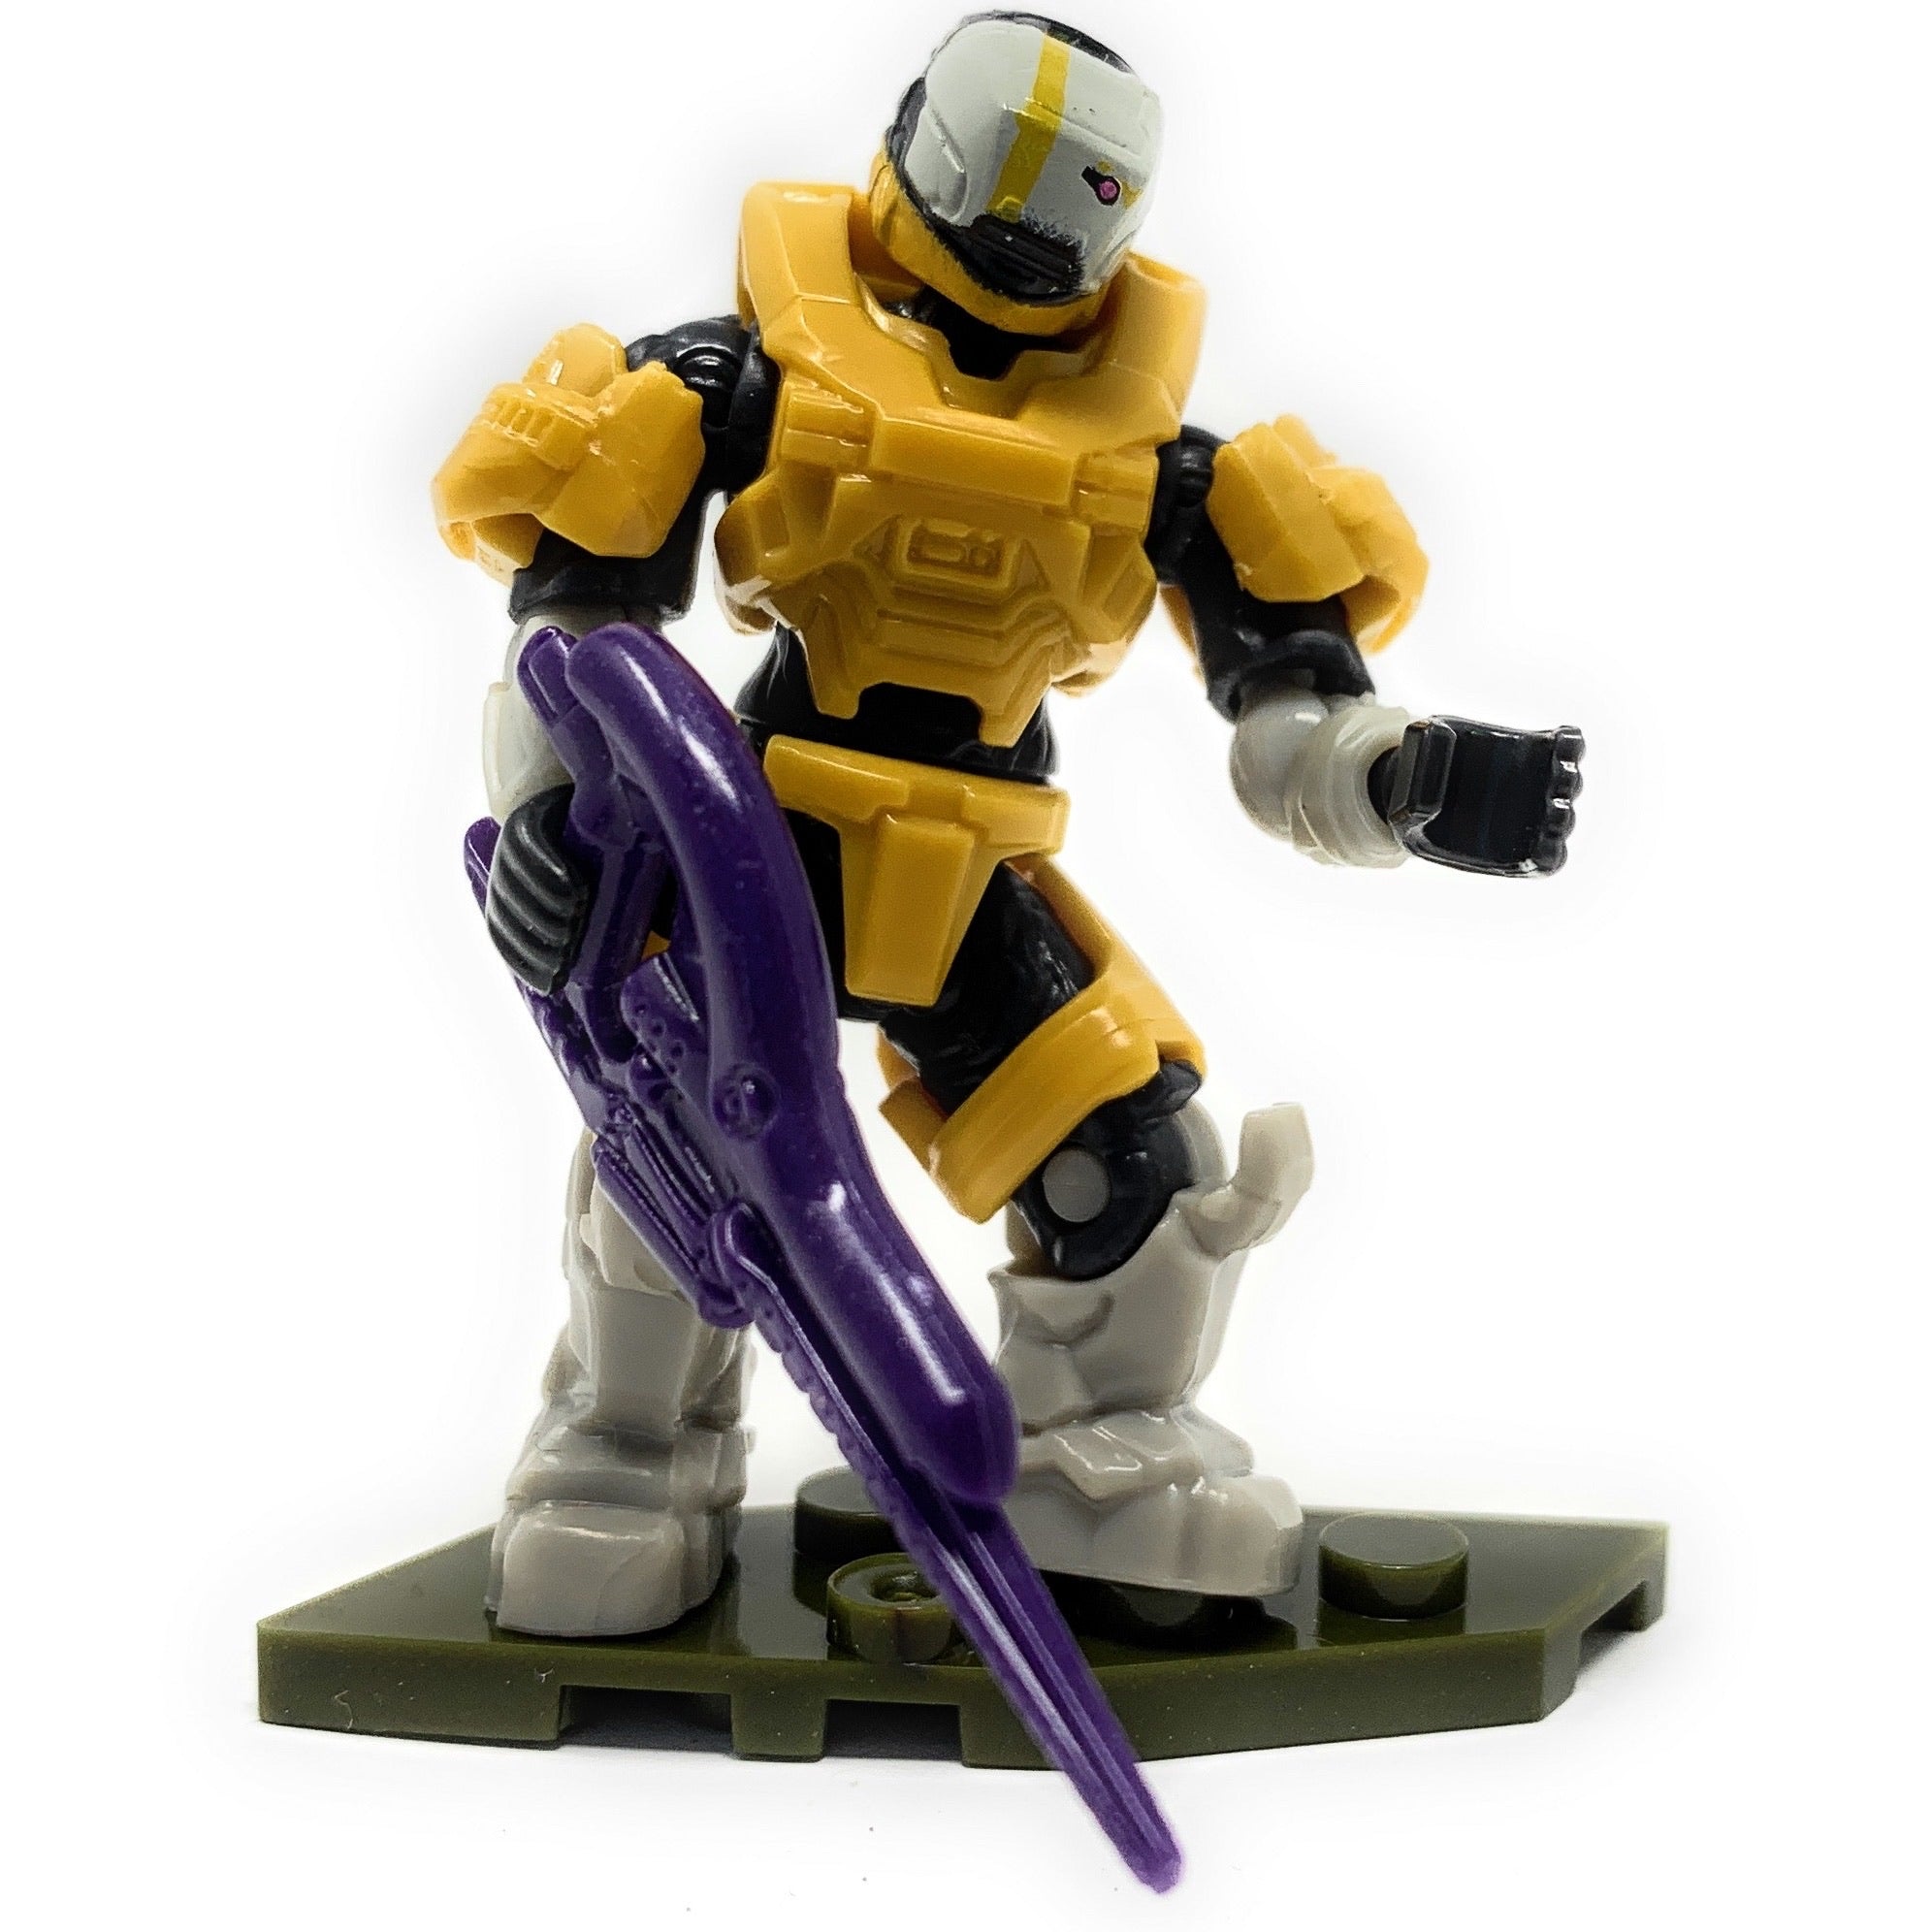 Spartan Gungir (Yellow) - Mega Construx Halo Micro Figure, Infinite Series 1 (2020)